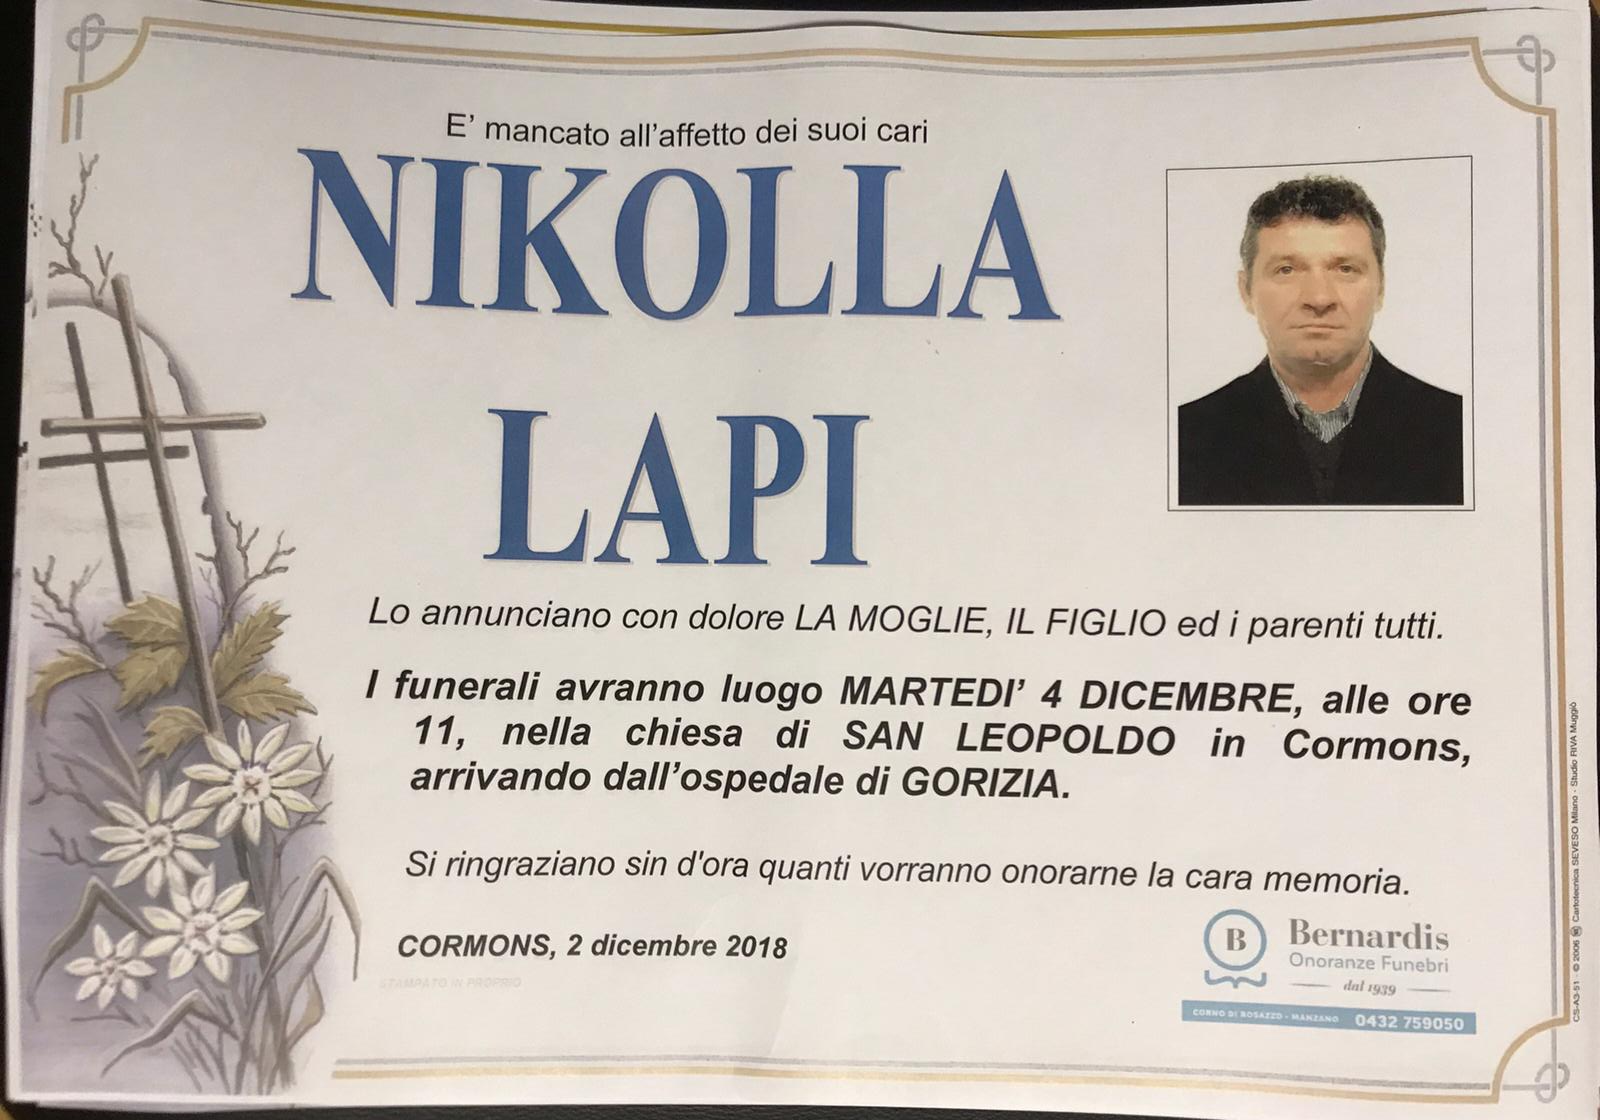 Nikolla Lapi